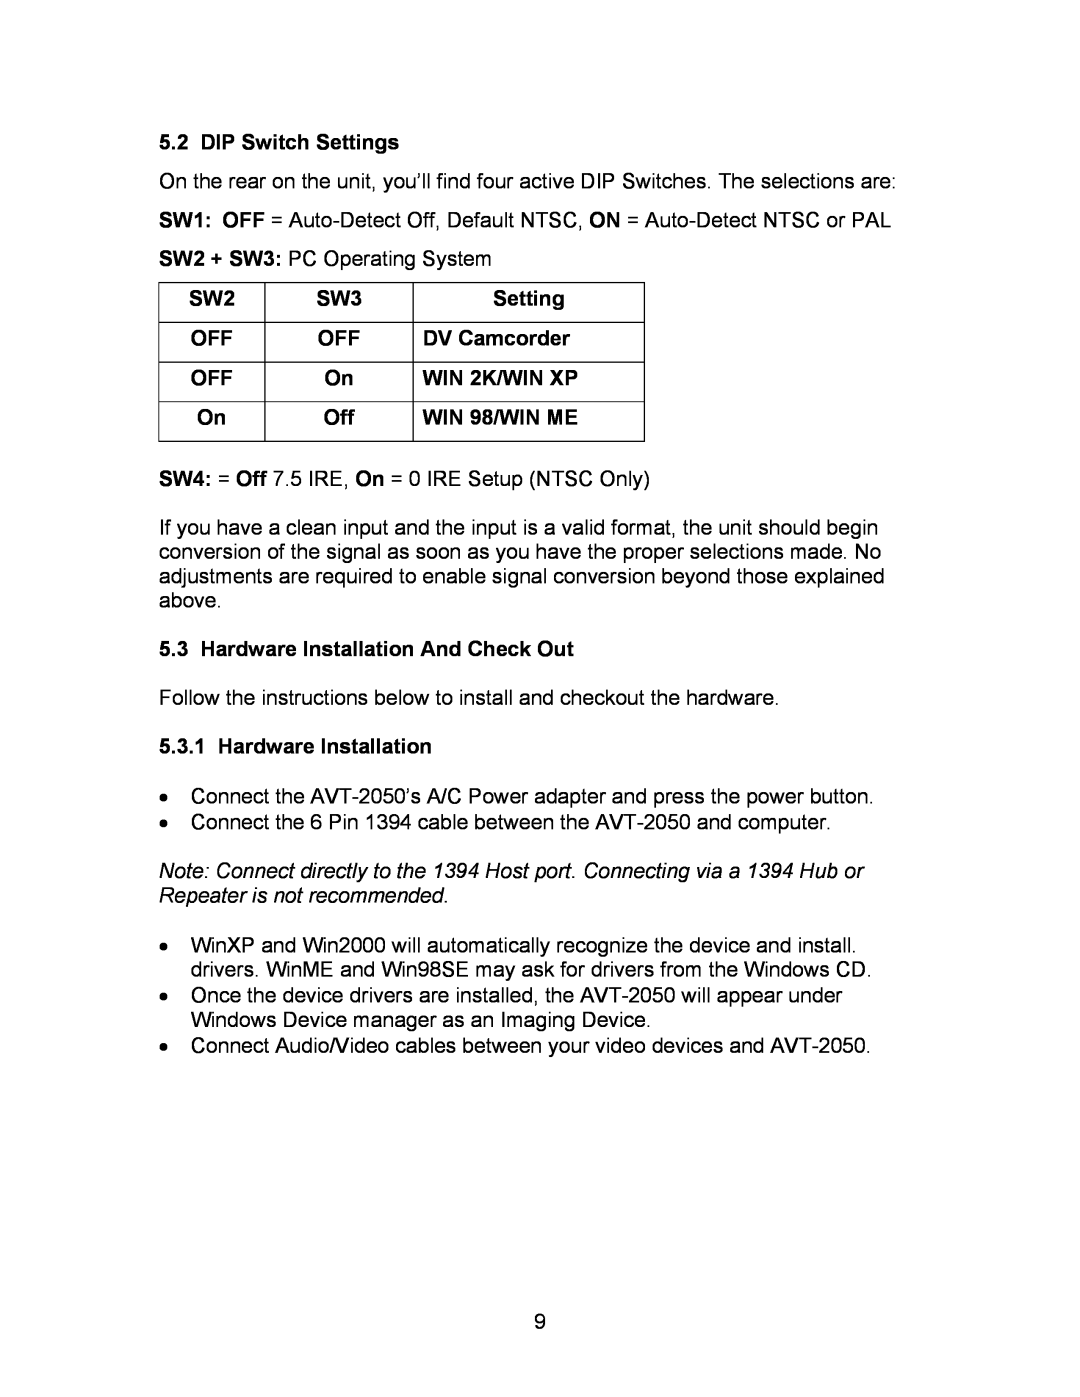 RCA AVT-2050 instruction manual SW1 OFF = Auto-Detect Off, Default NTSC, ON = Auto-Detect NTSC or PAL 